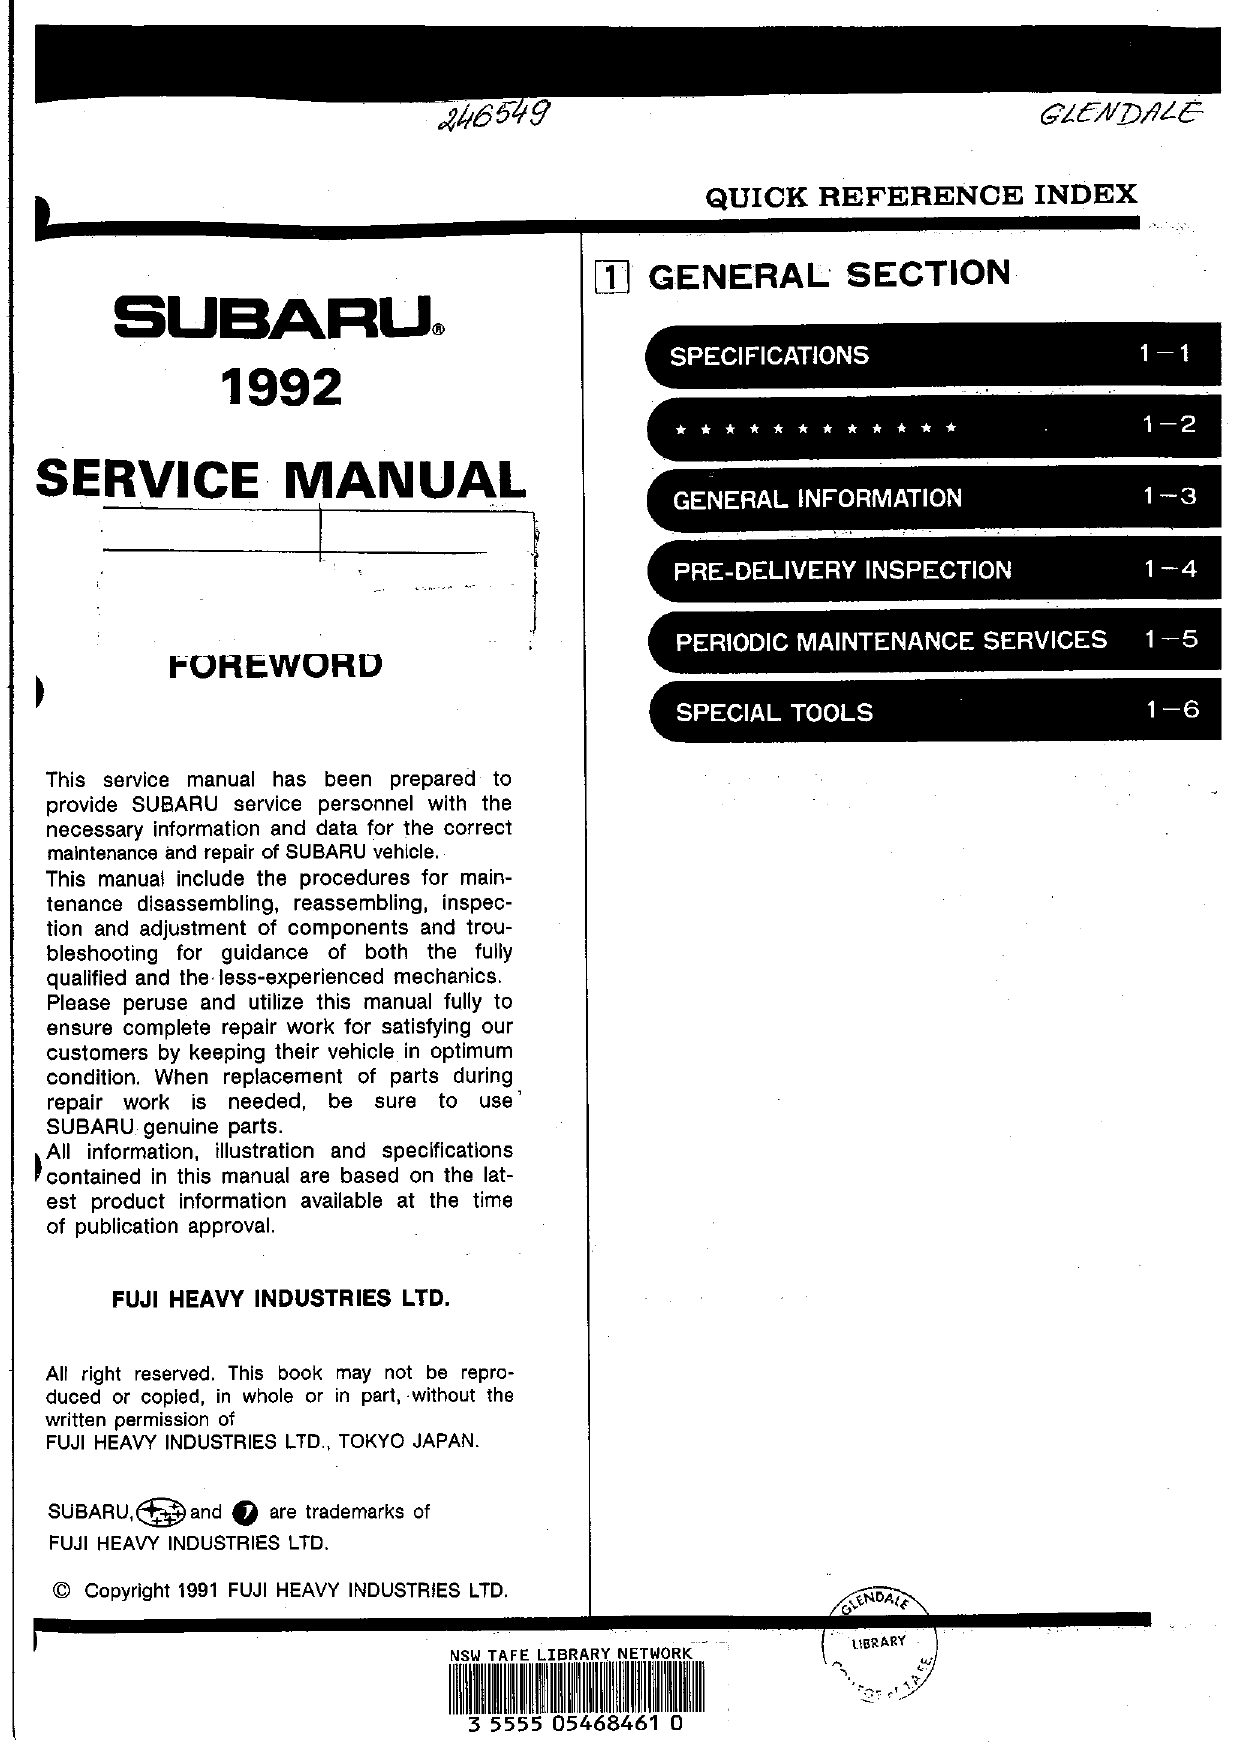 1989-1992 Subaru Liberty, Subaru Legacy service manual Preview image 2